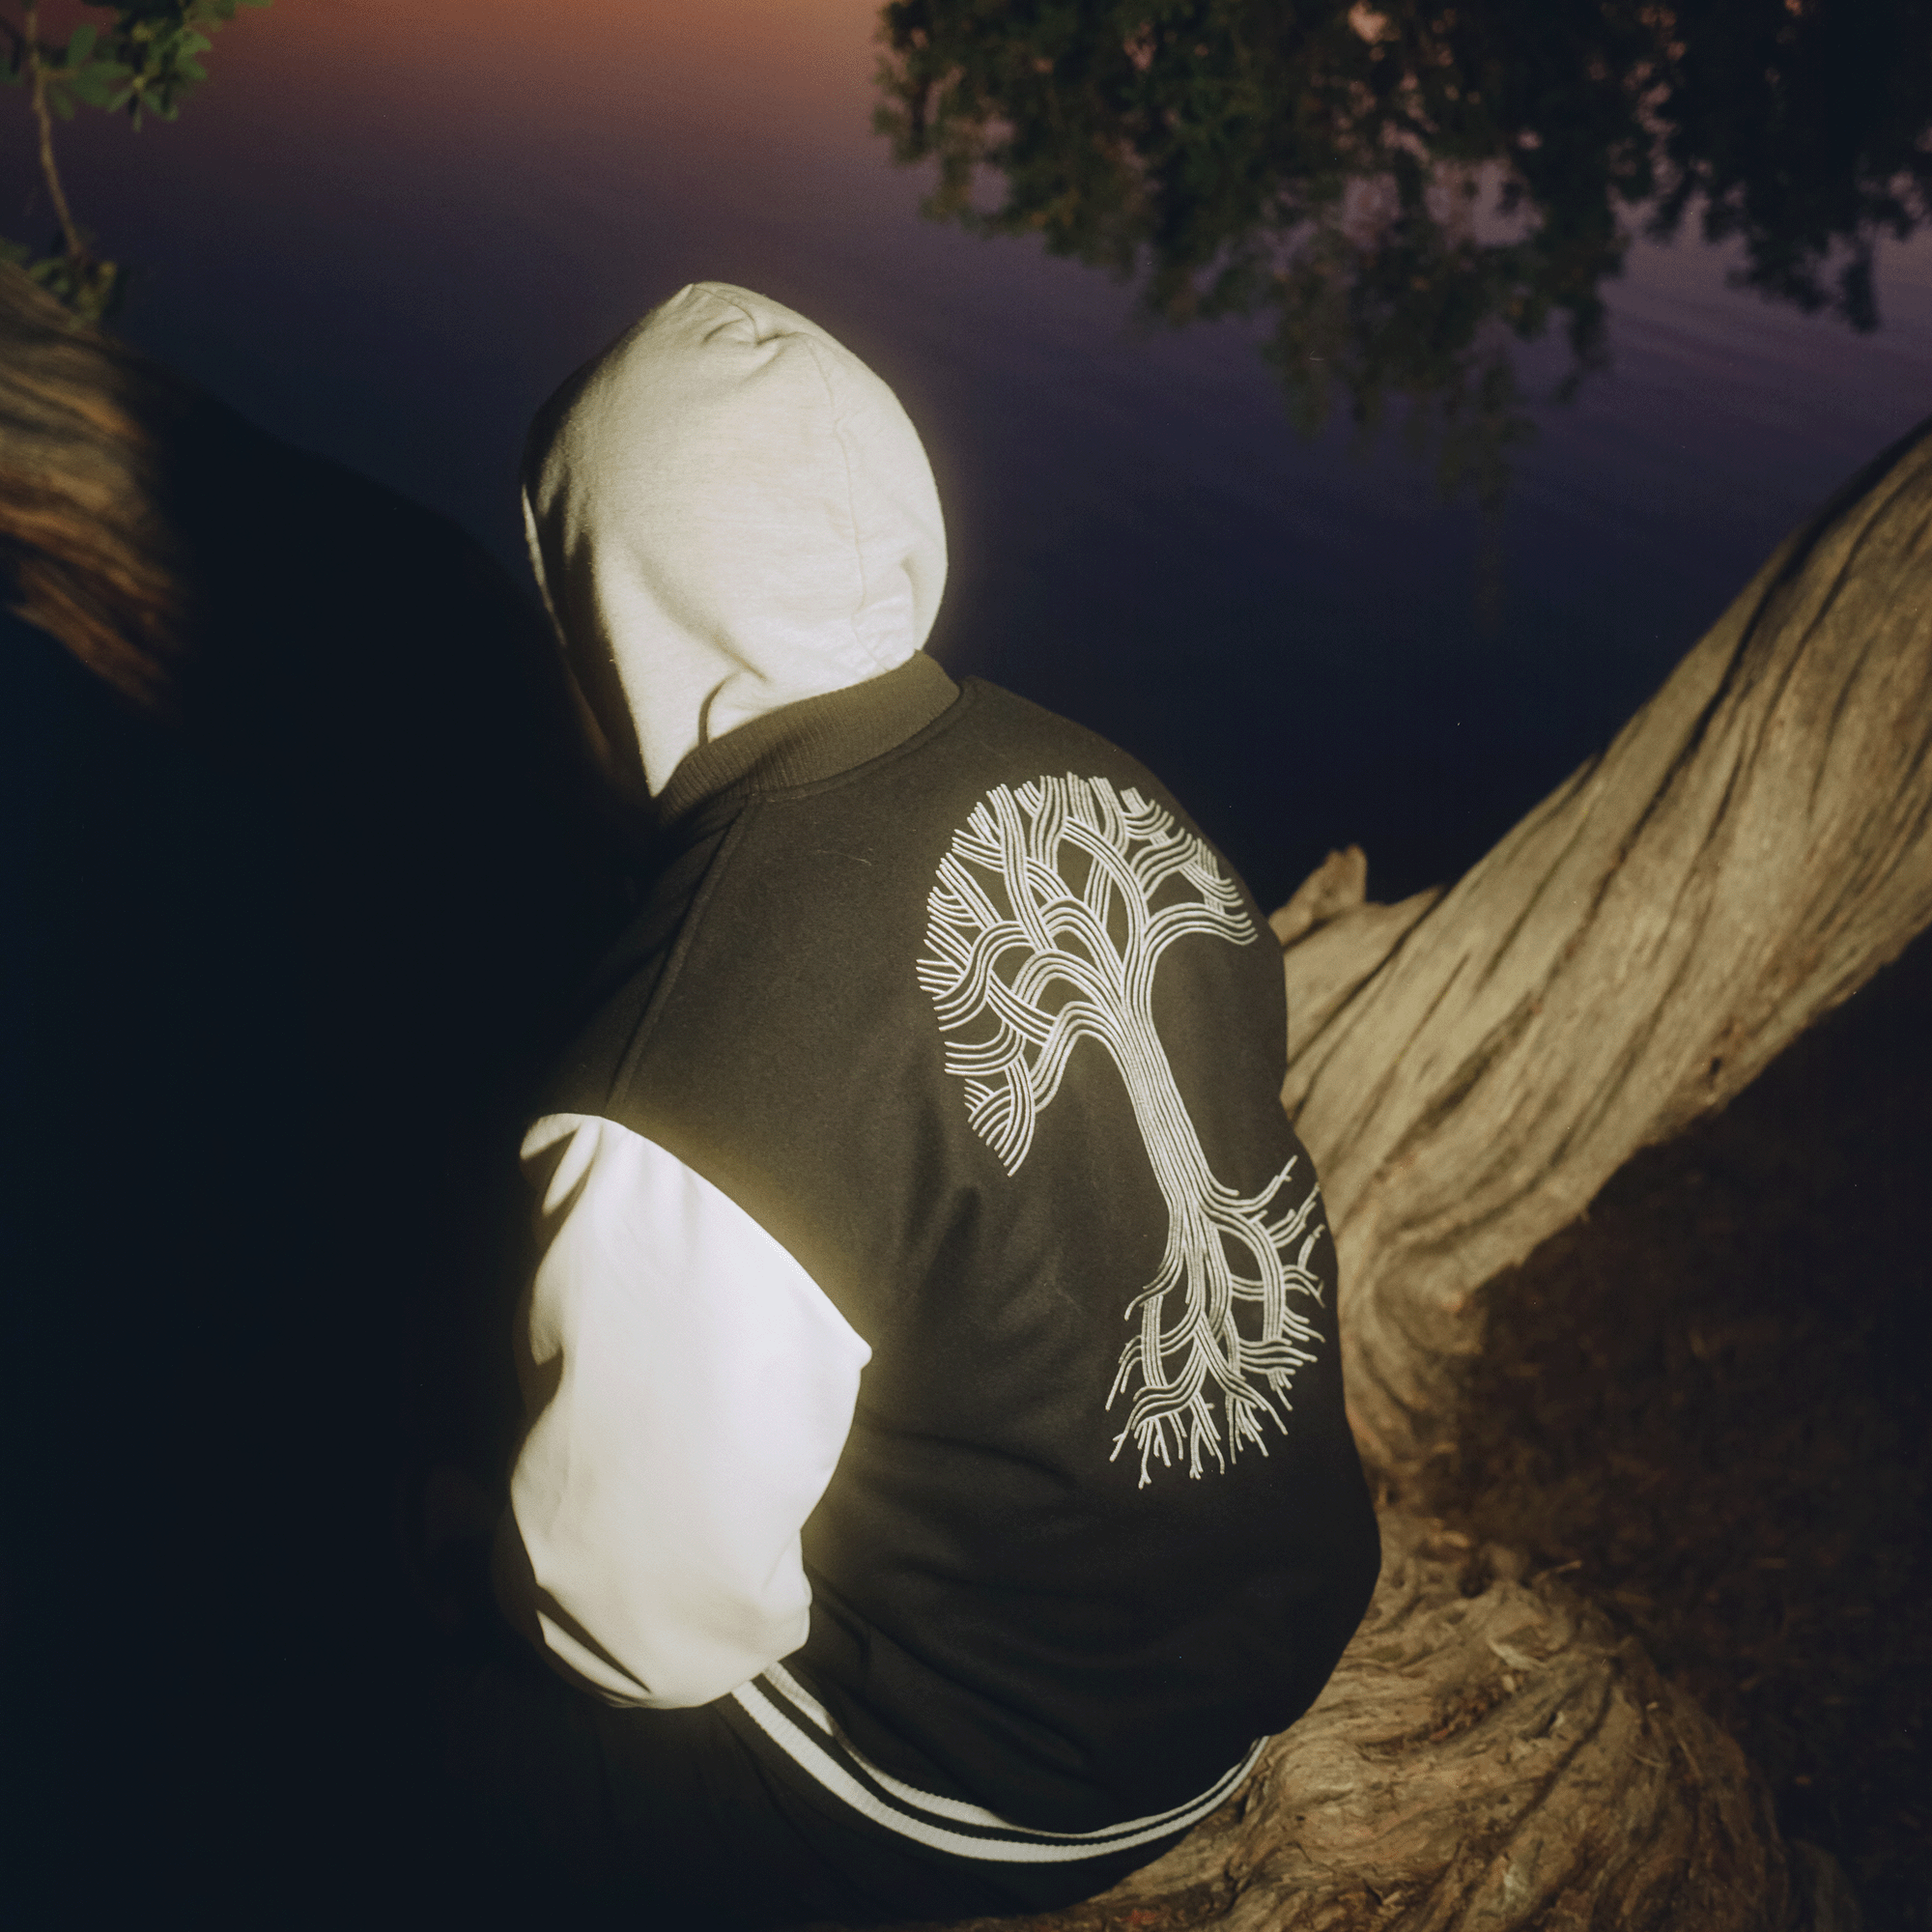 A man sitting beside the lake at sunset wearing a black and white varsity jacket with large Oaklandish tree logo on the back.